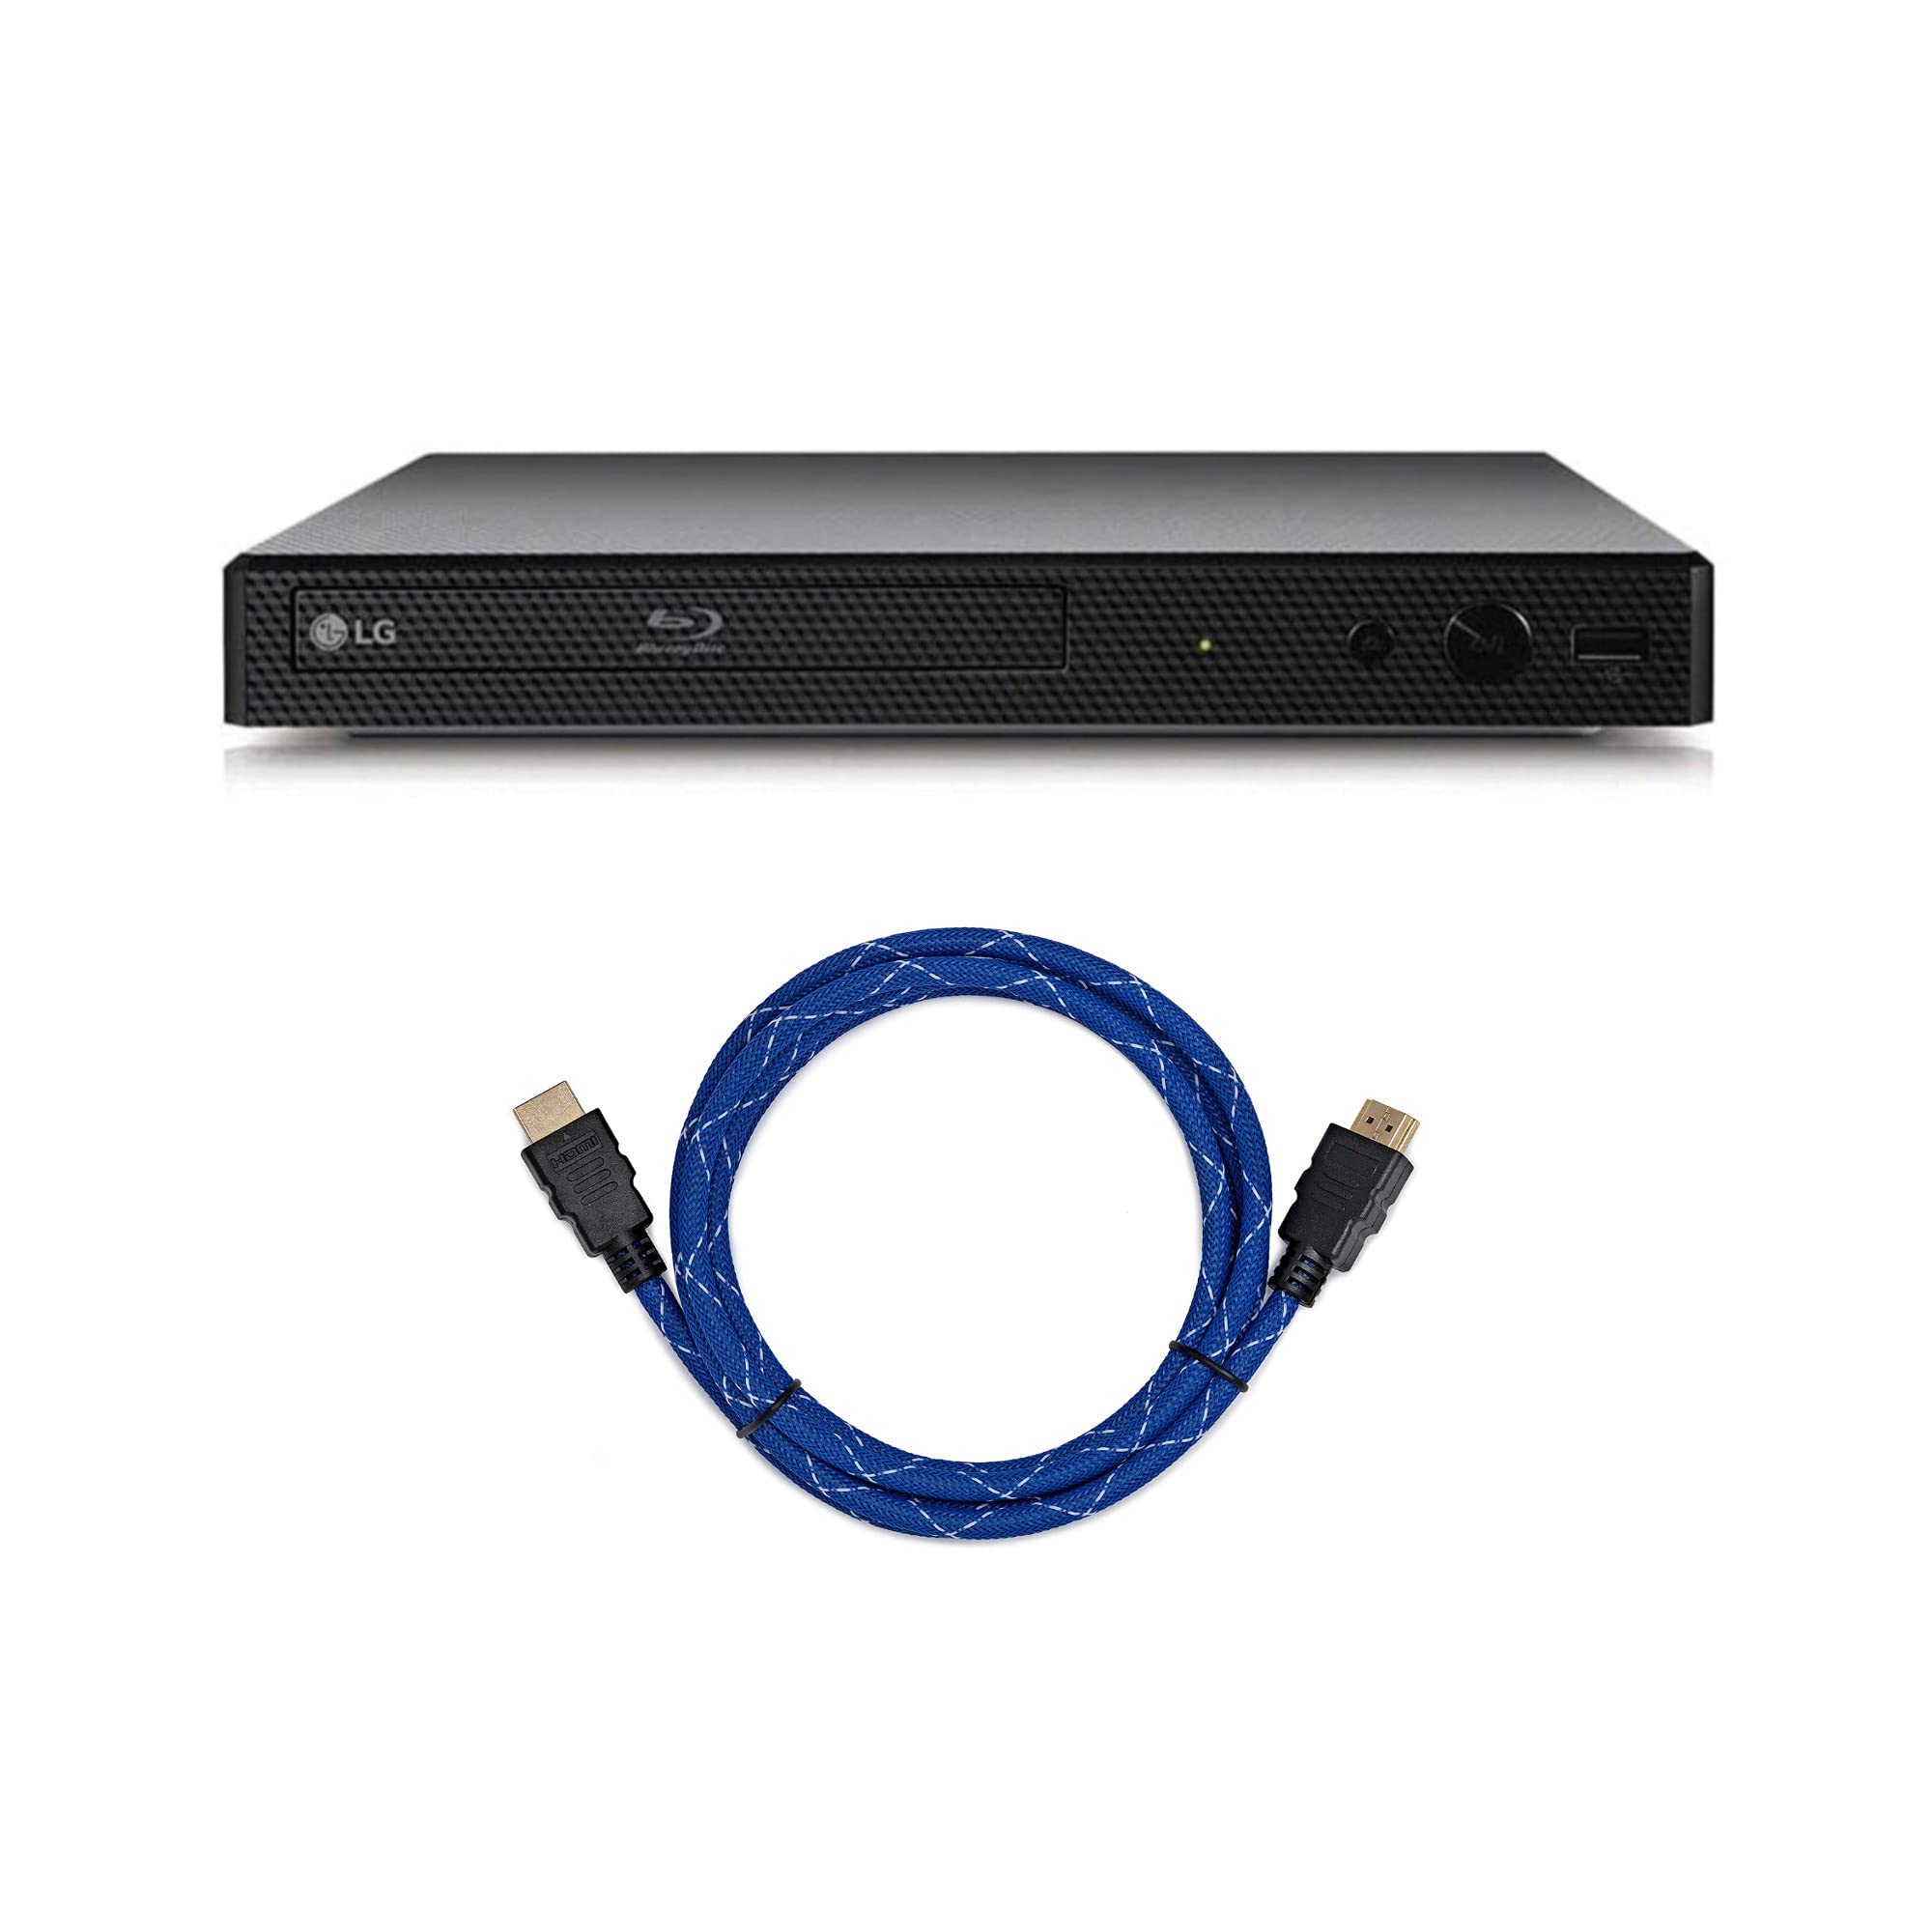 LG BP175 蓝光 DVD 播放器，带 HDMI 端口捆绑包（附带 6 英尺 HDMI 电缆）